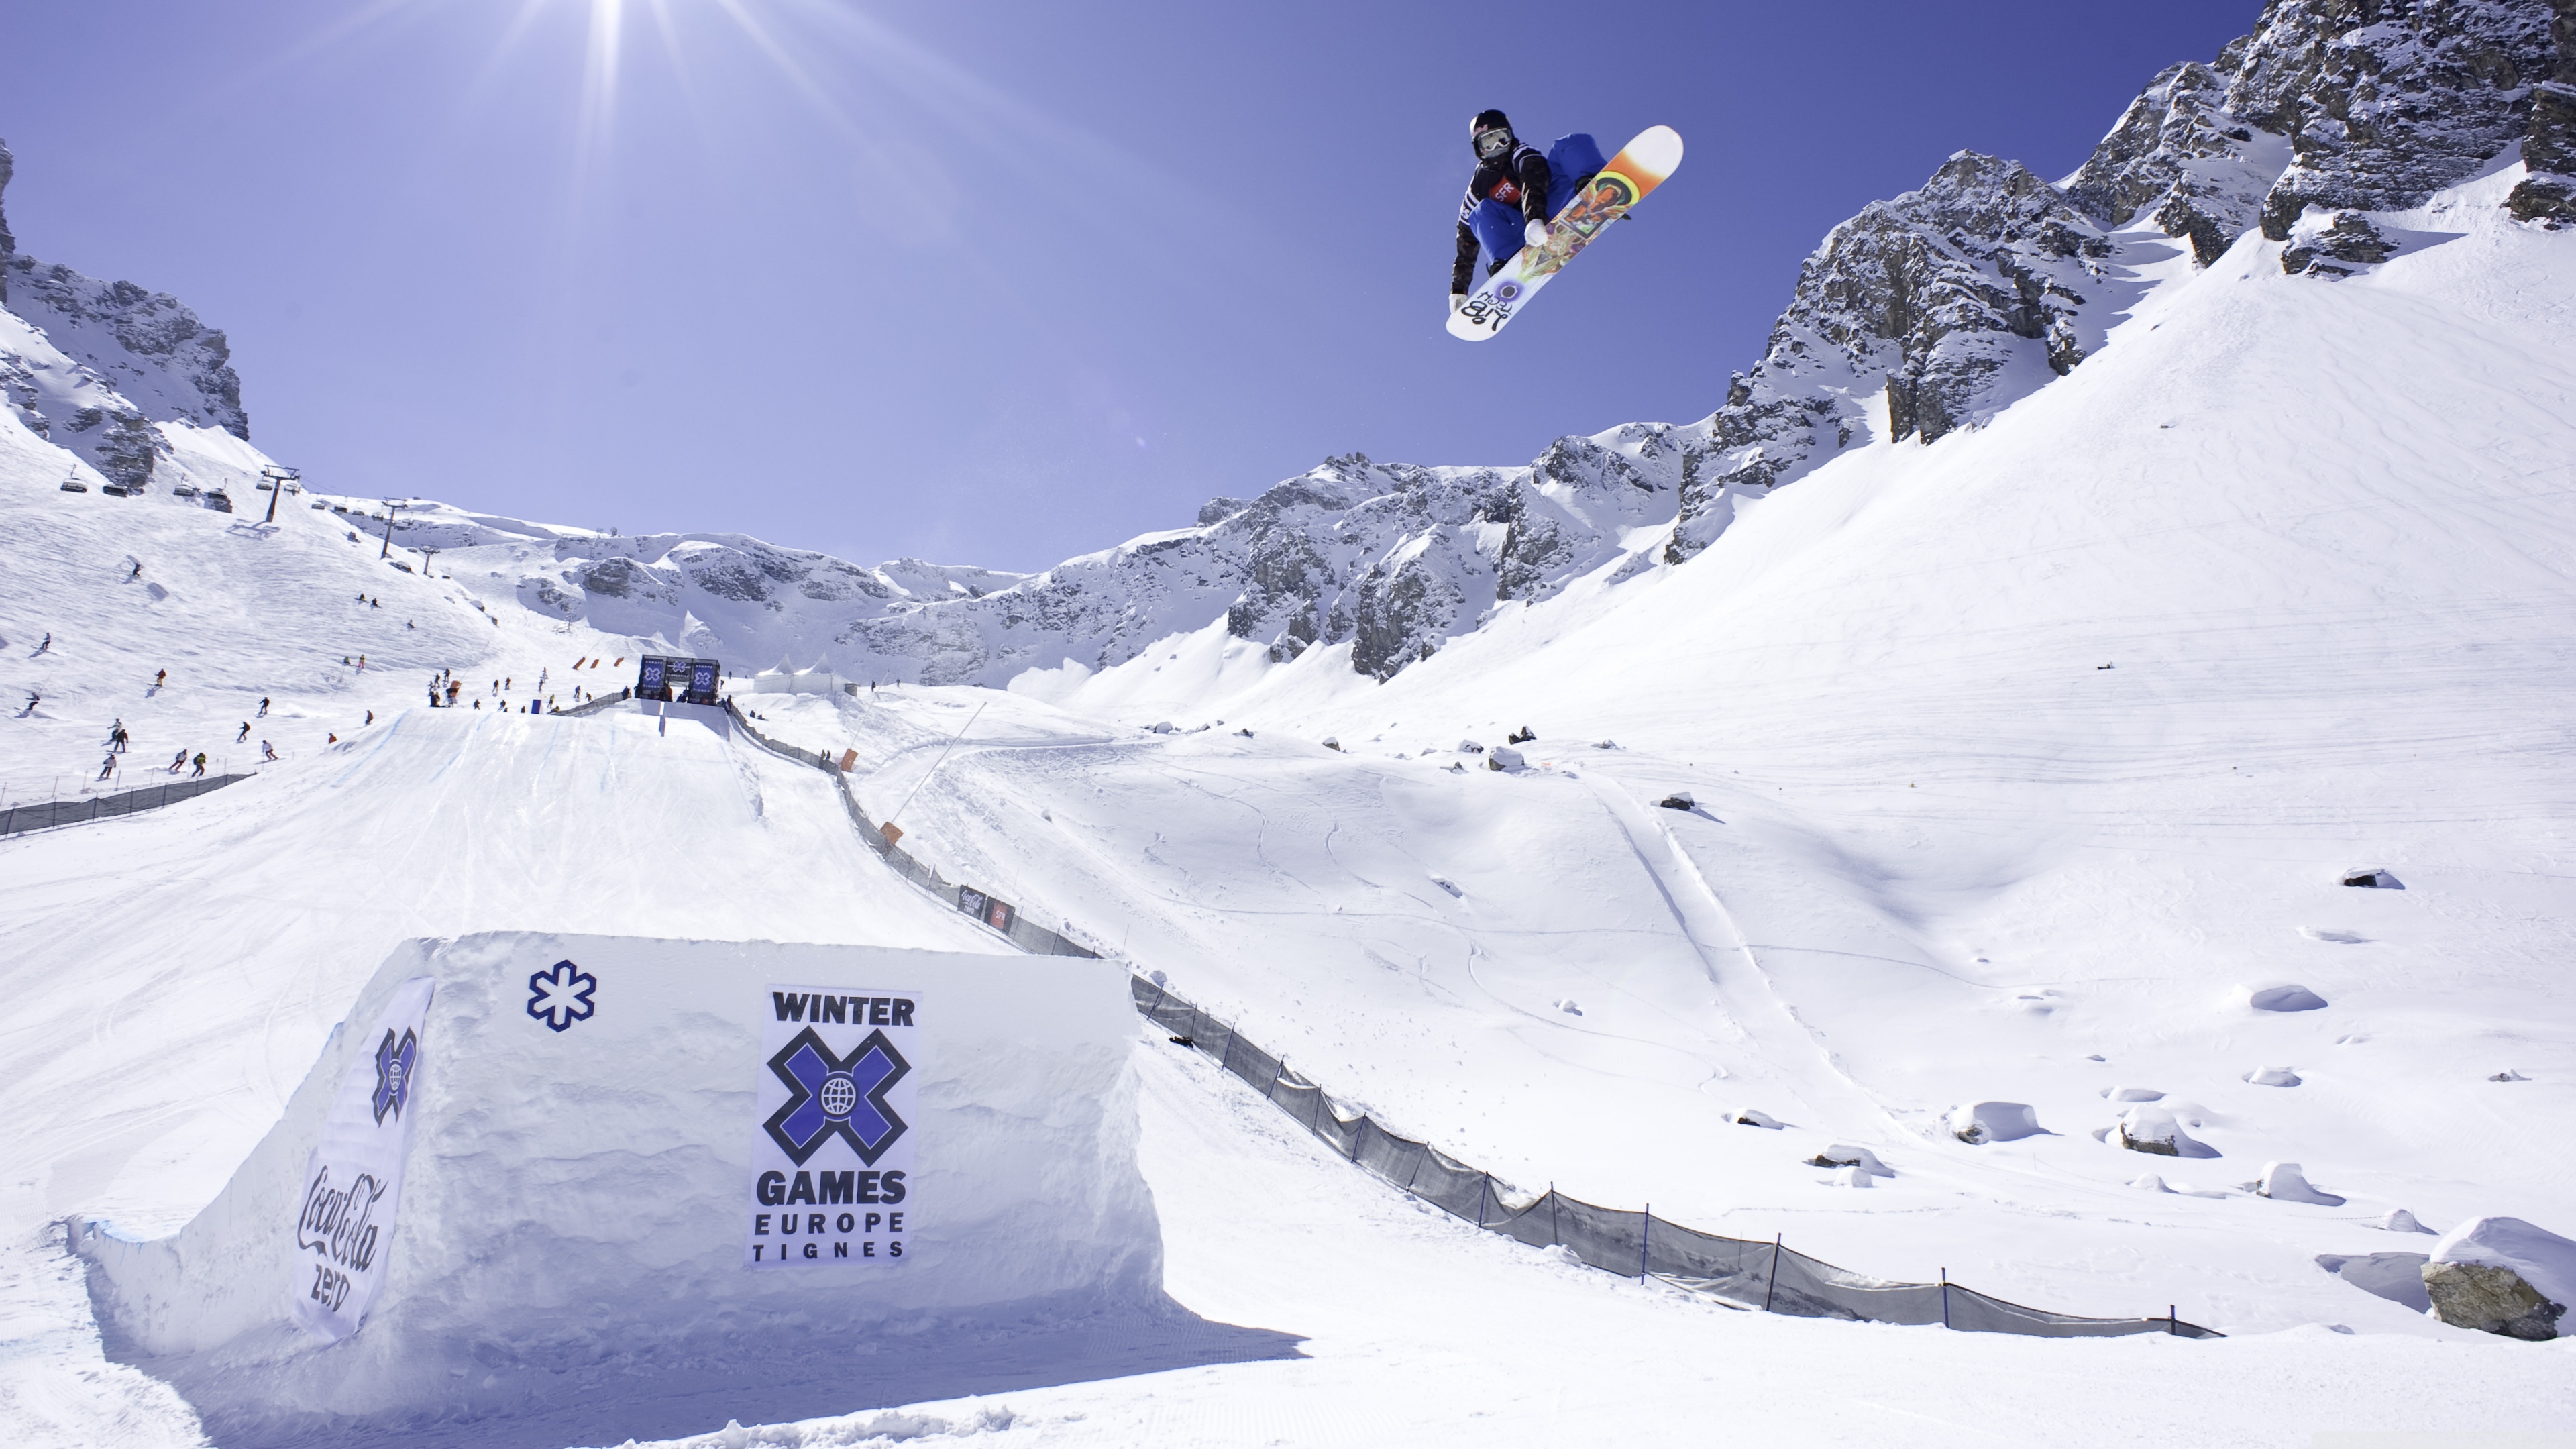 Hd Snowboarding Mountain Wallpaper Mobile Free Download